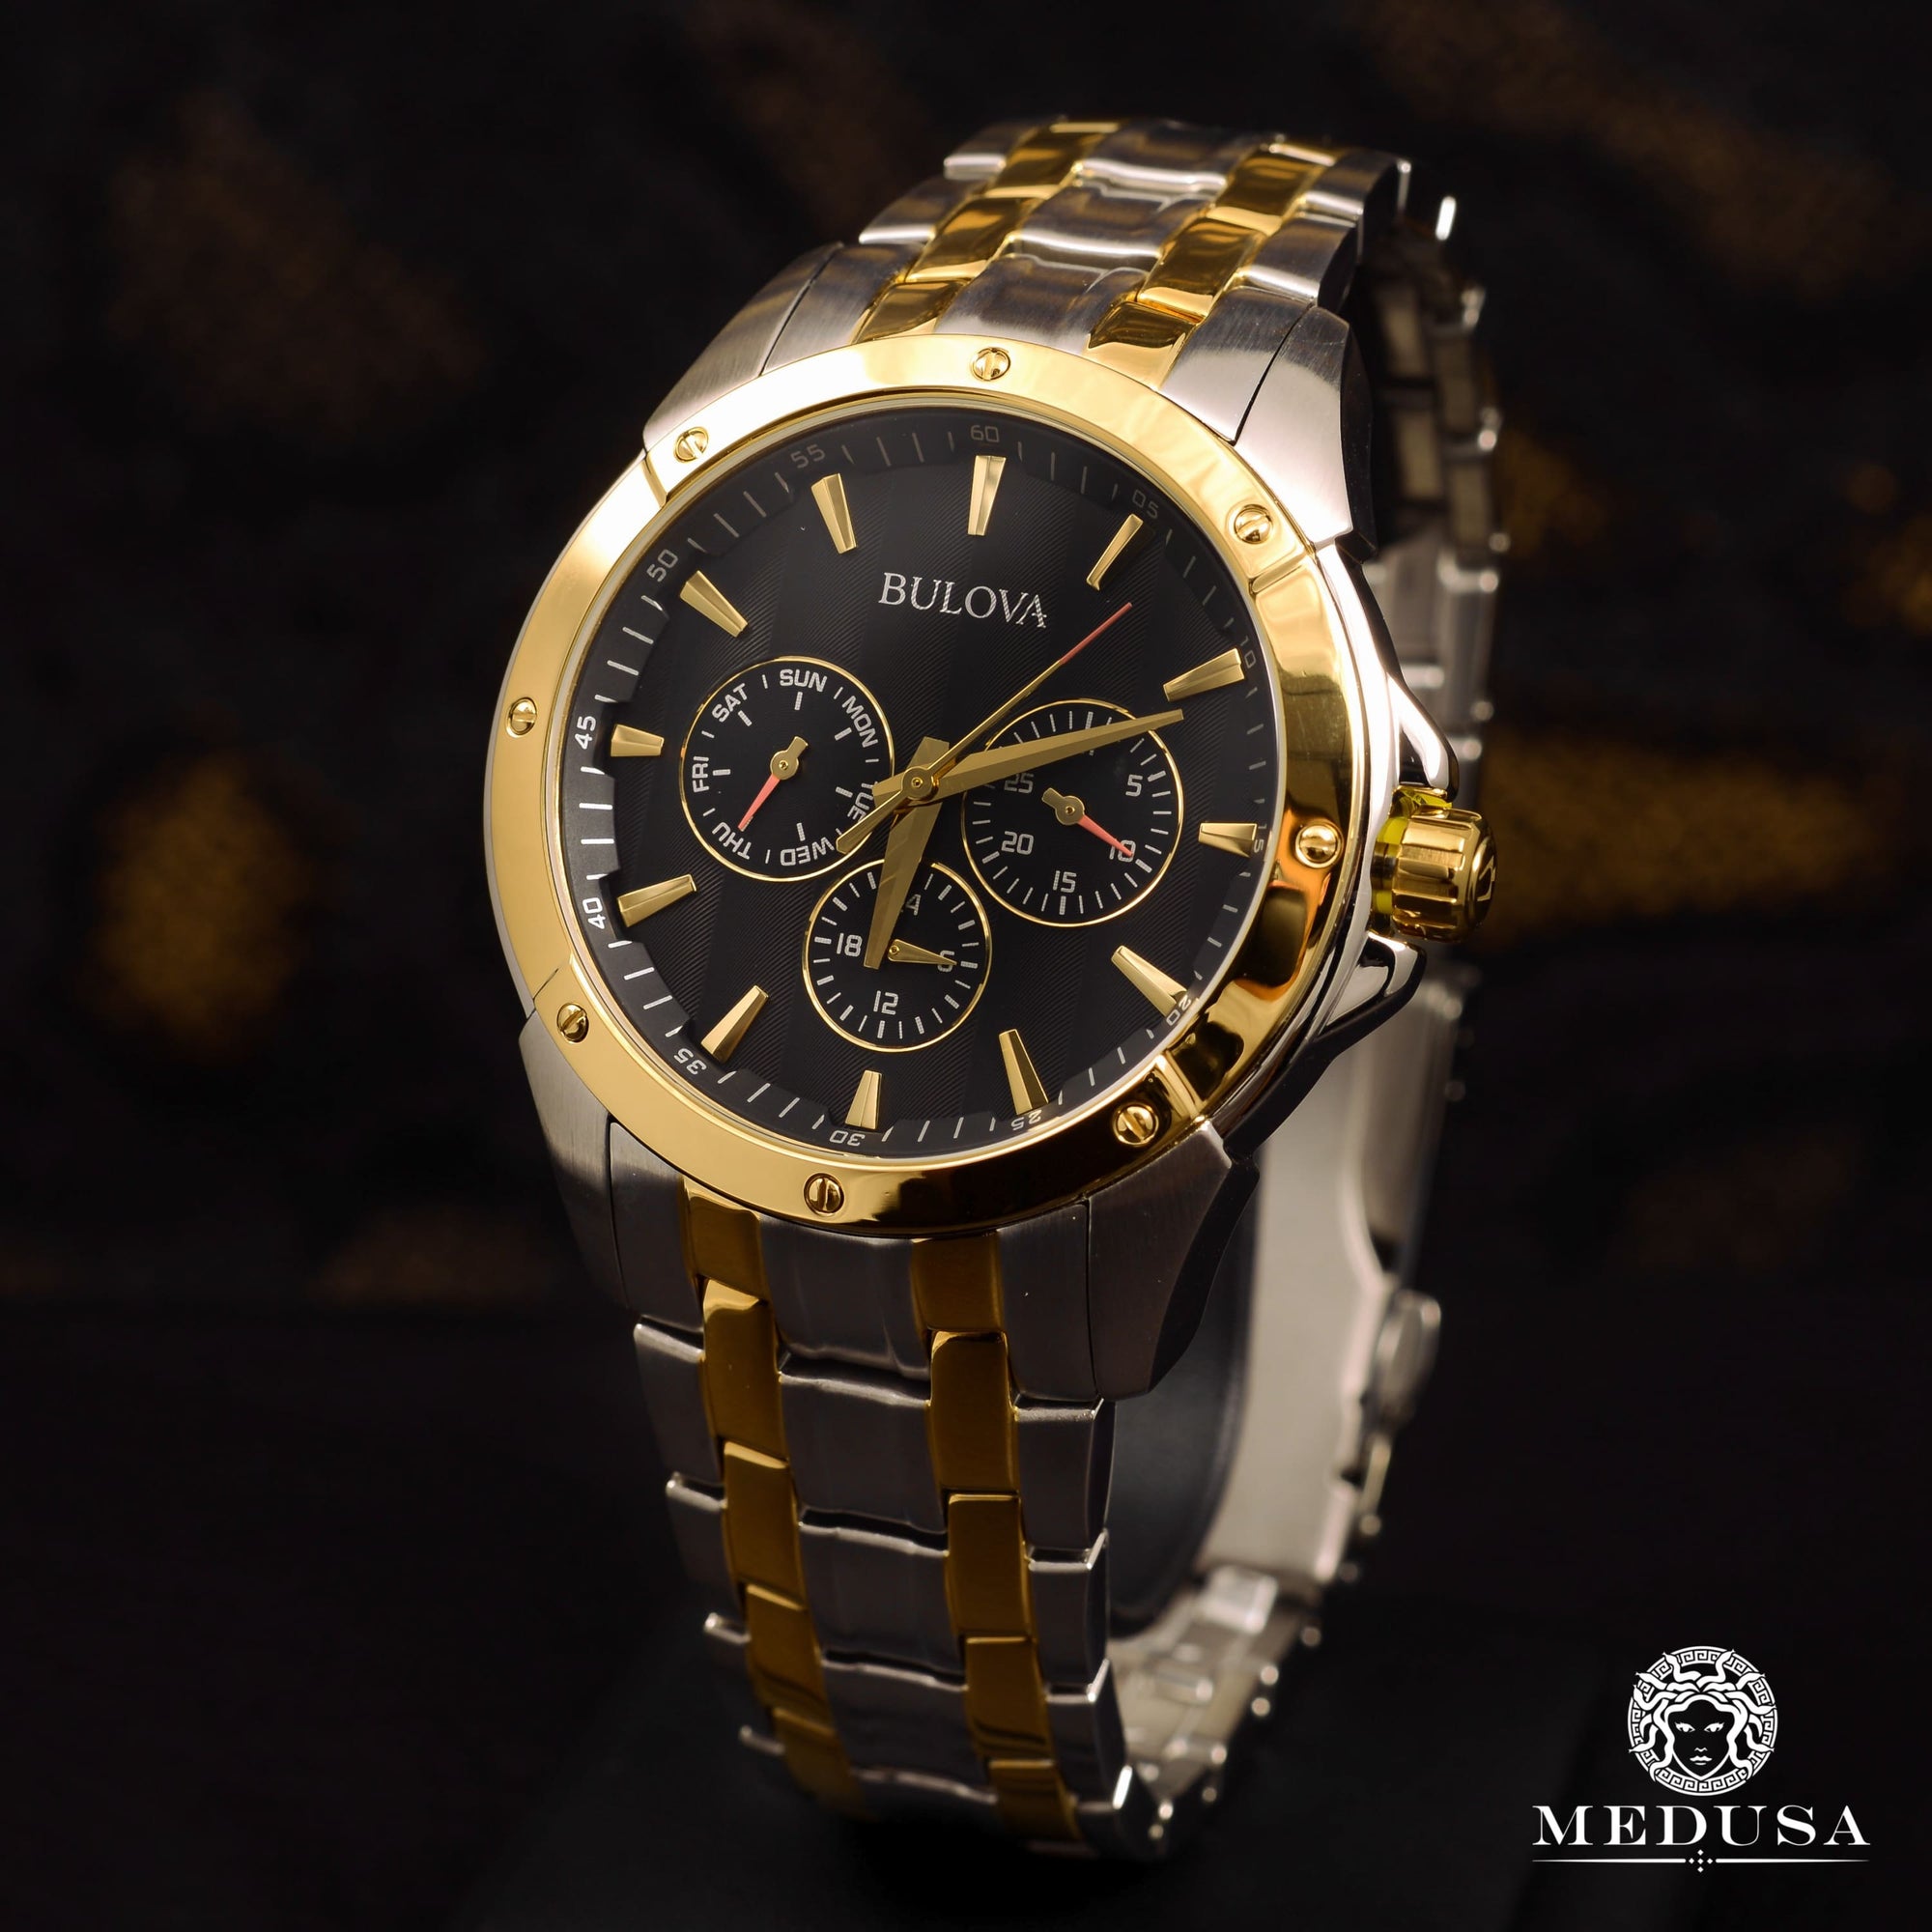 Bulova Watch | Bulova Classic Men's Watch - 98C120 Gold 2 Tones